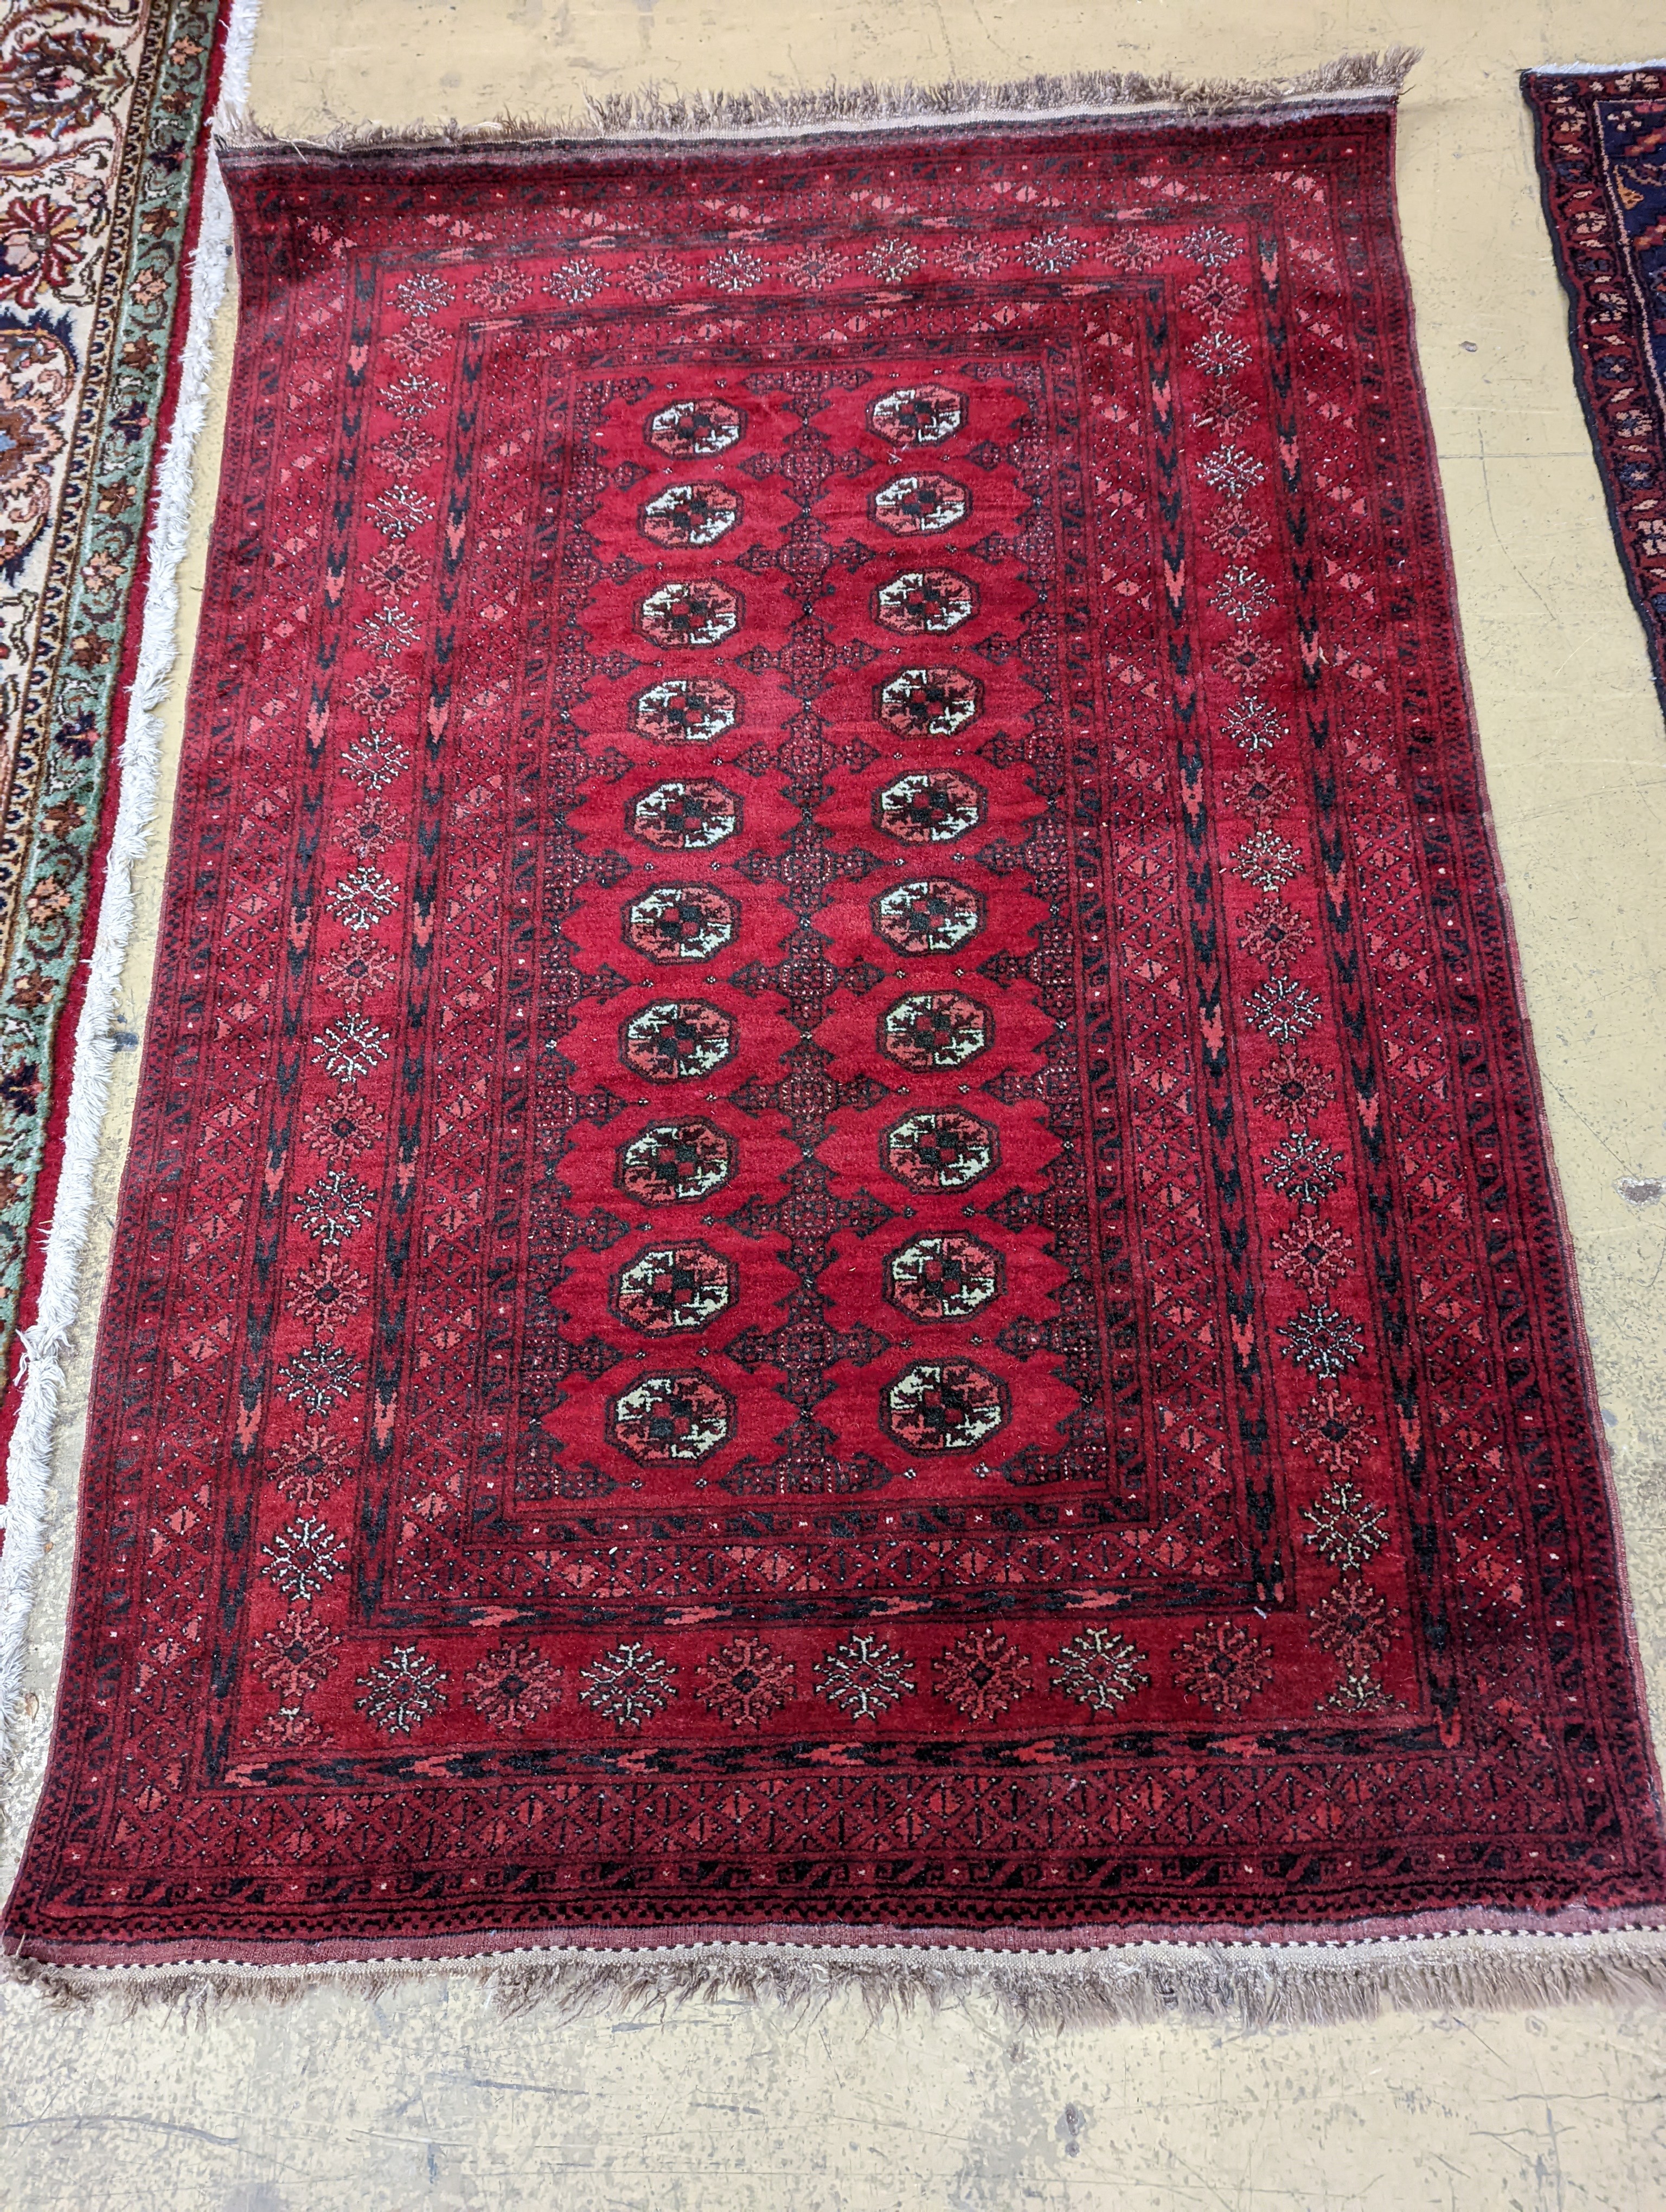 A Bokhara burgundy ground rug, 190 x 130cm